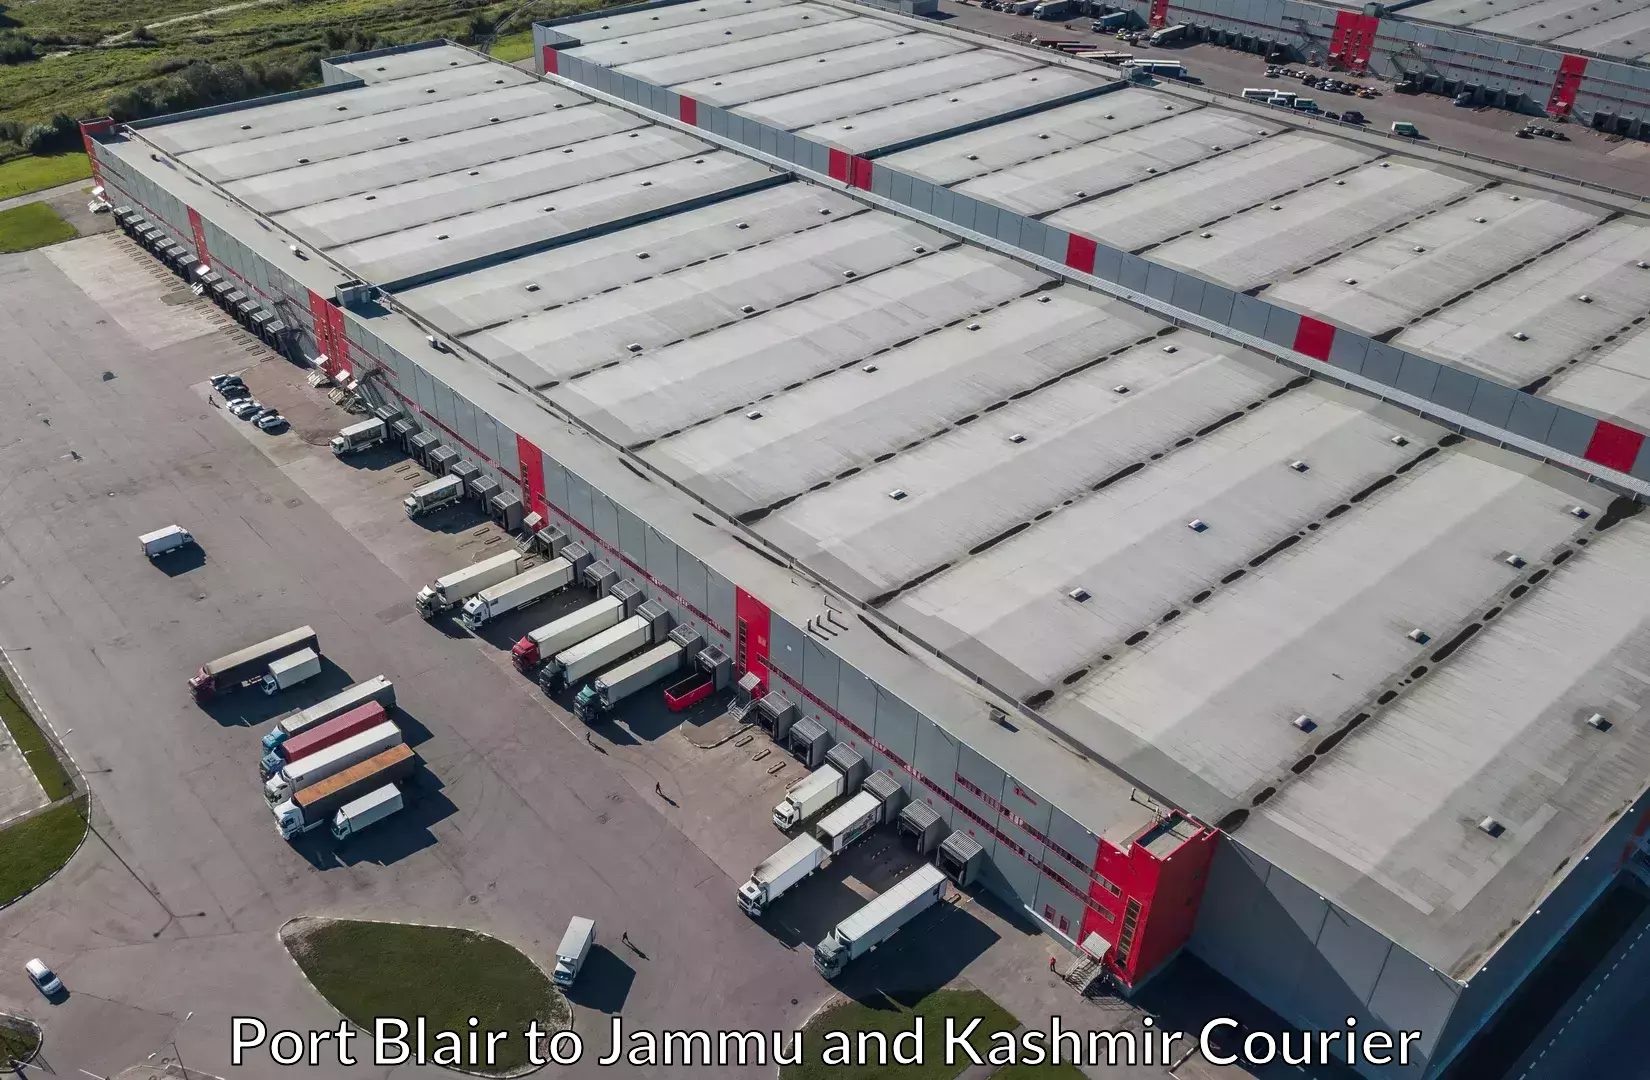 Home shifting experts Port Blair to Jammu and Kashmir